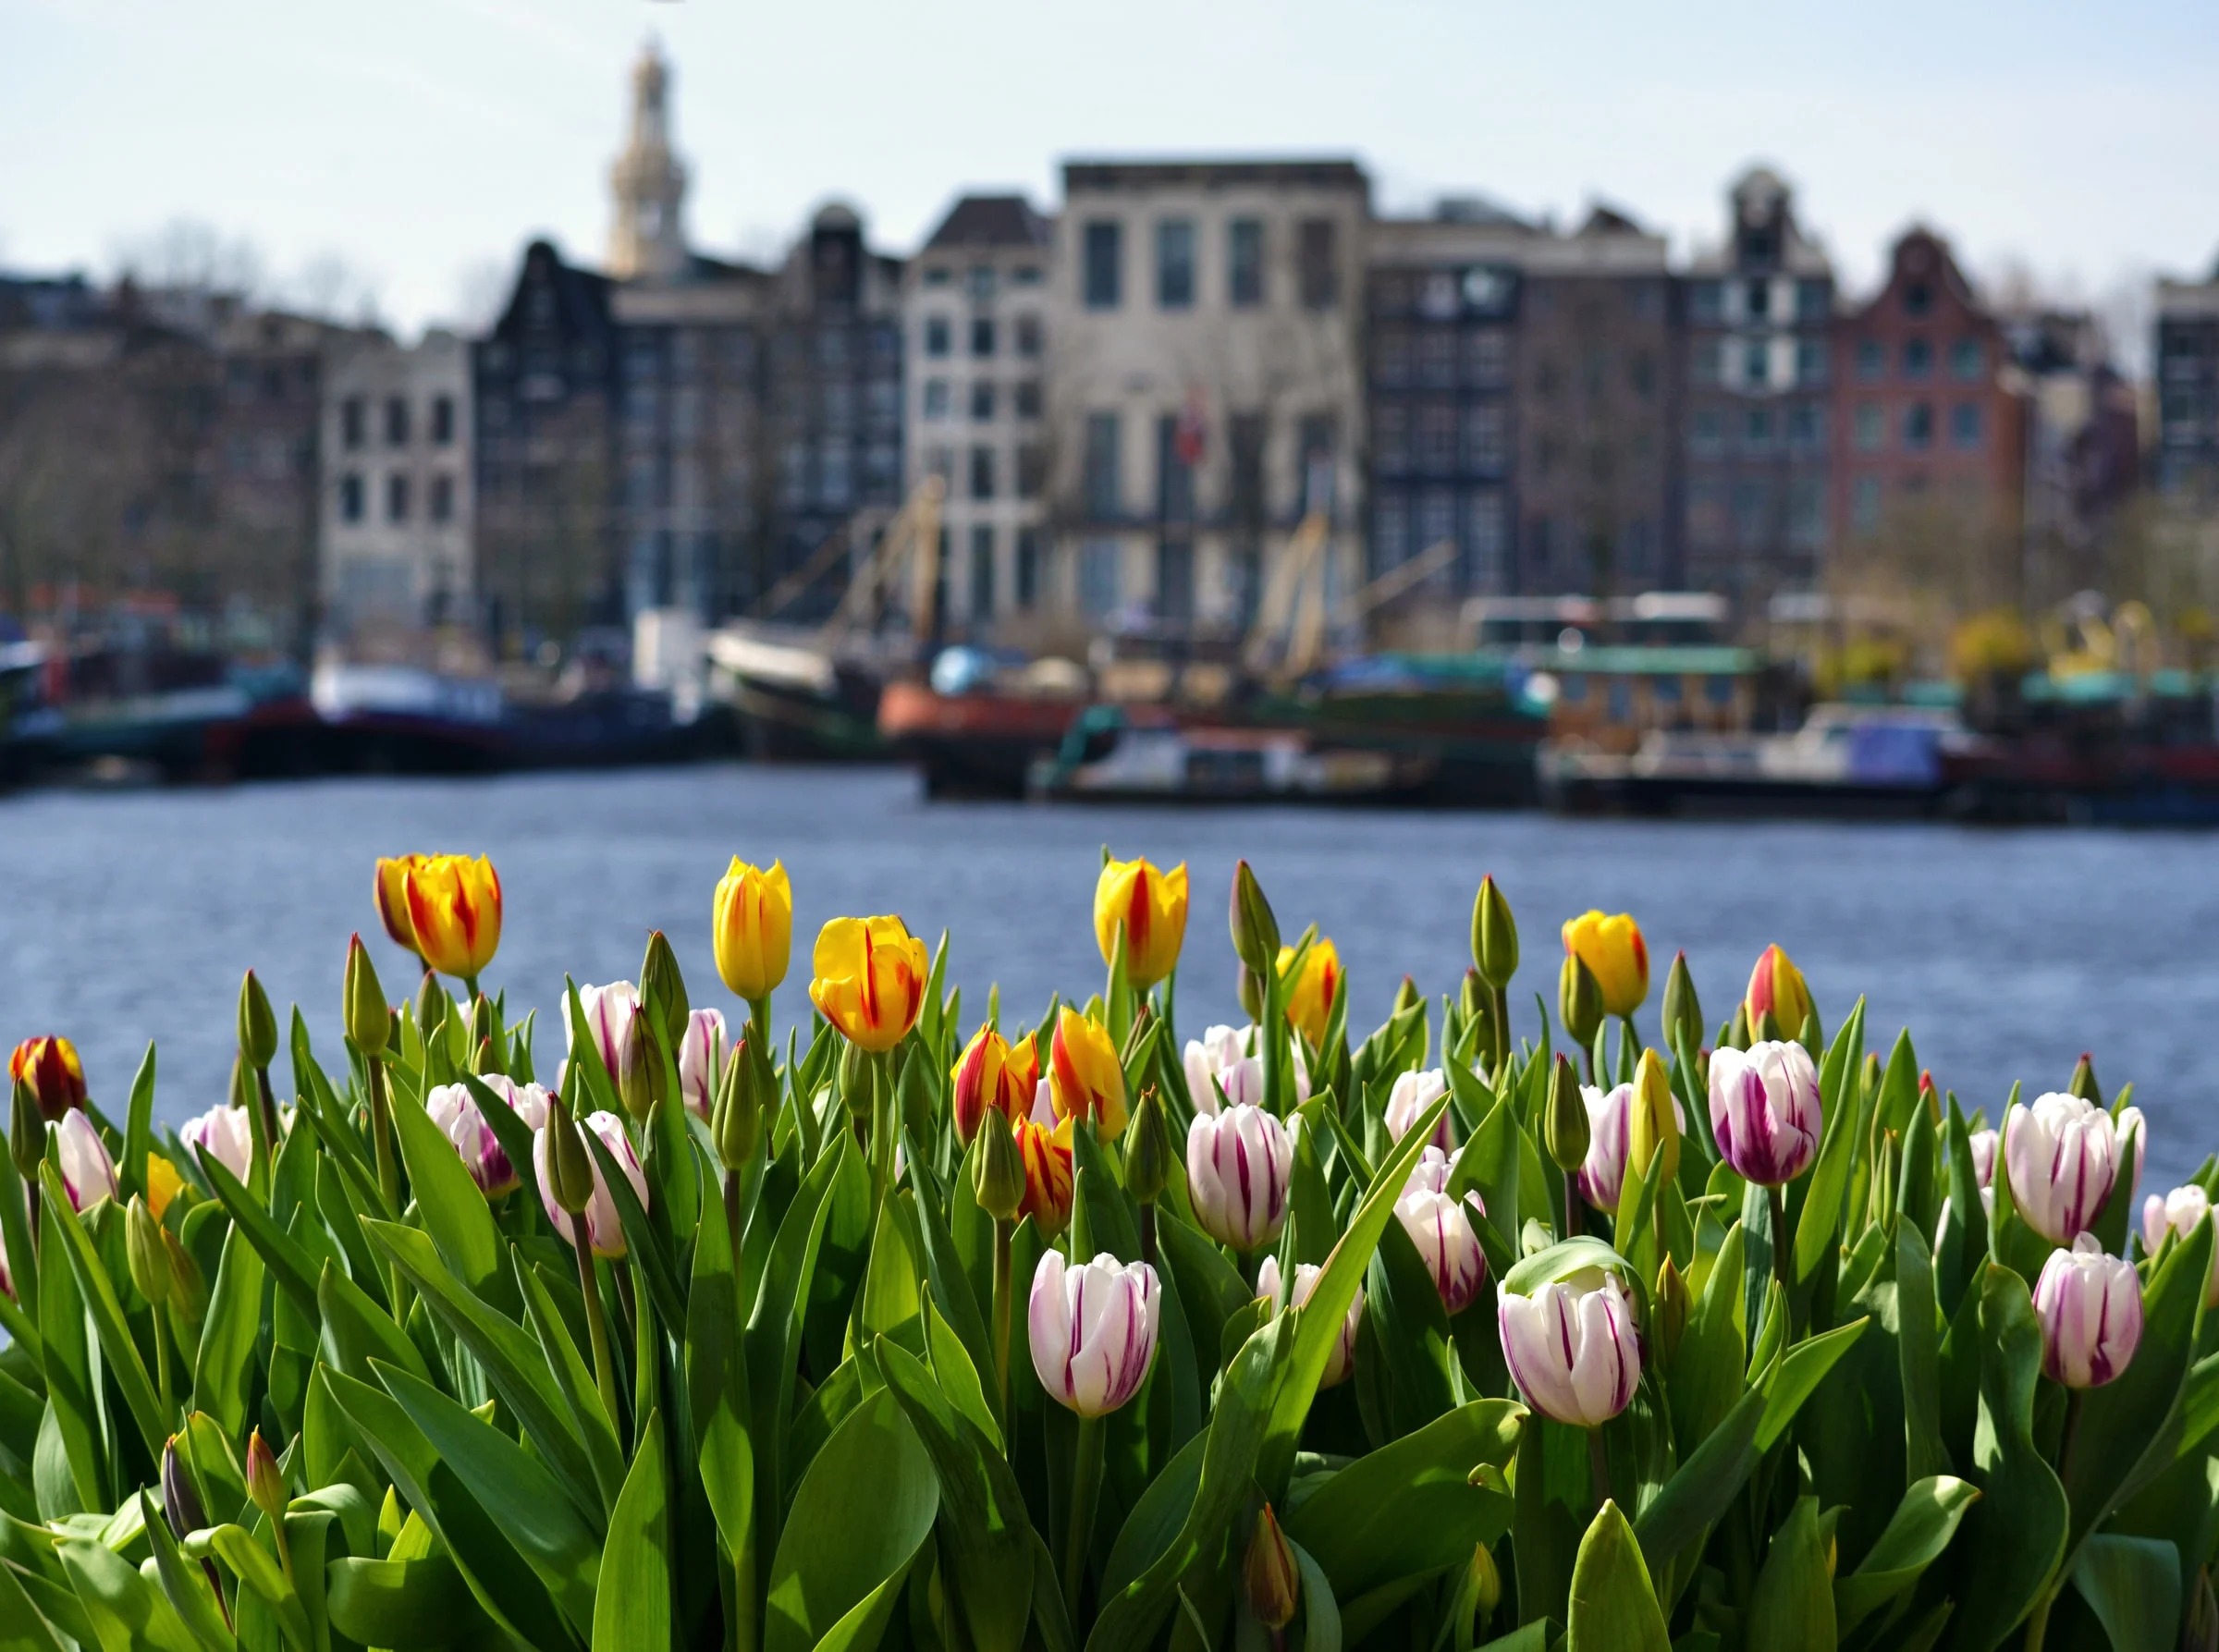 Tulips of Amsterdam